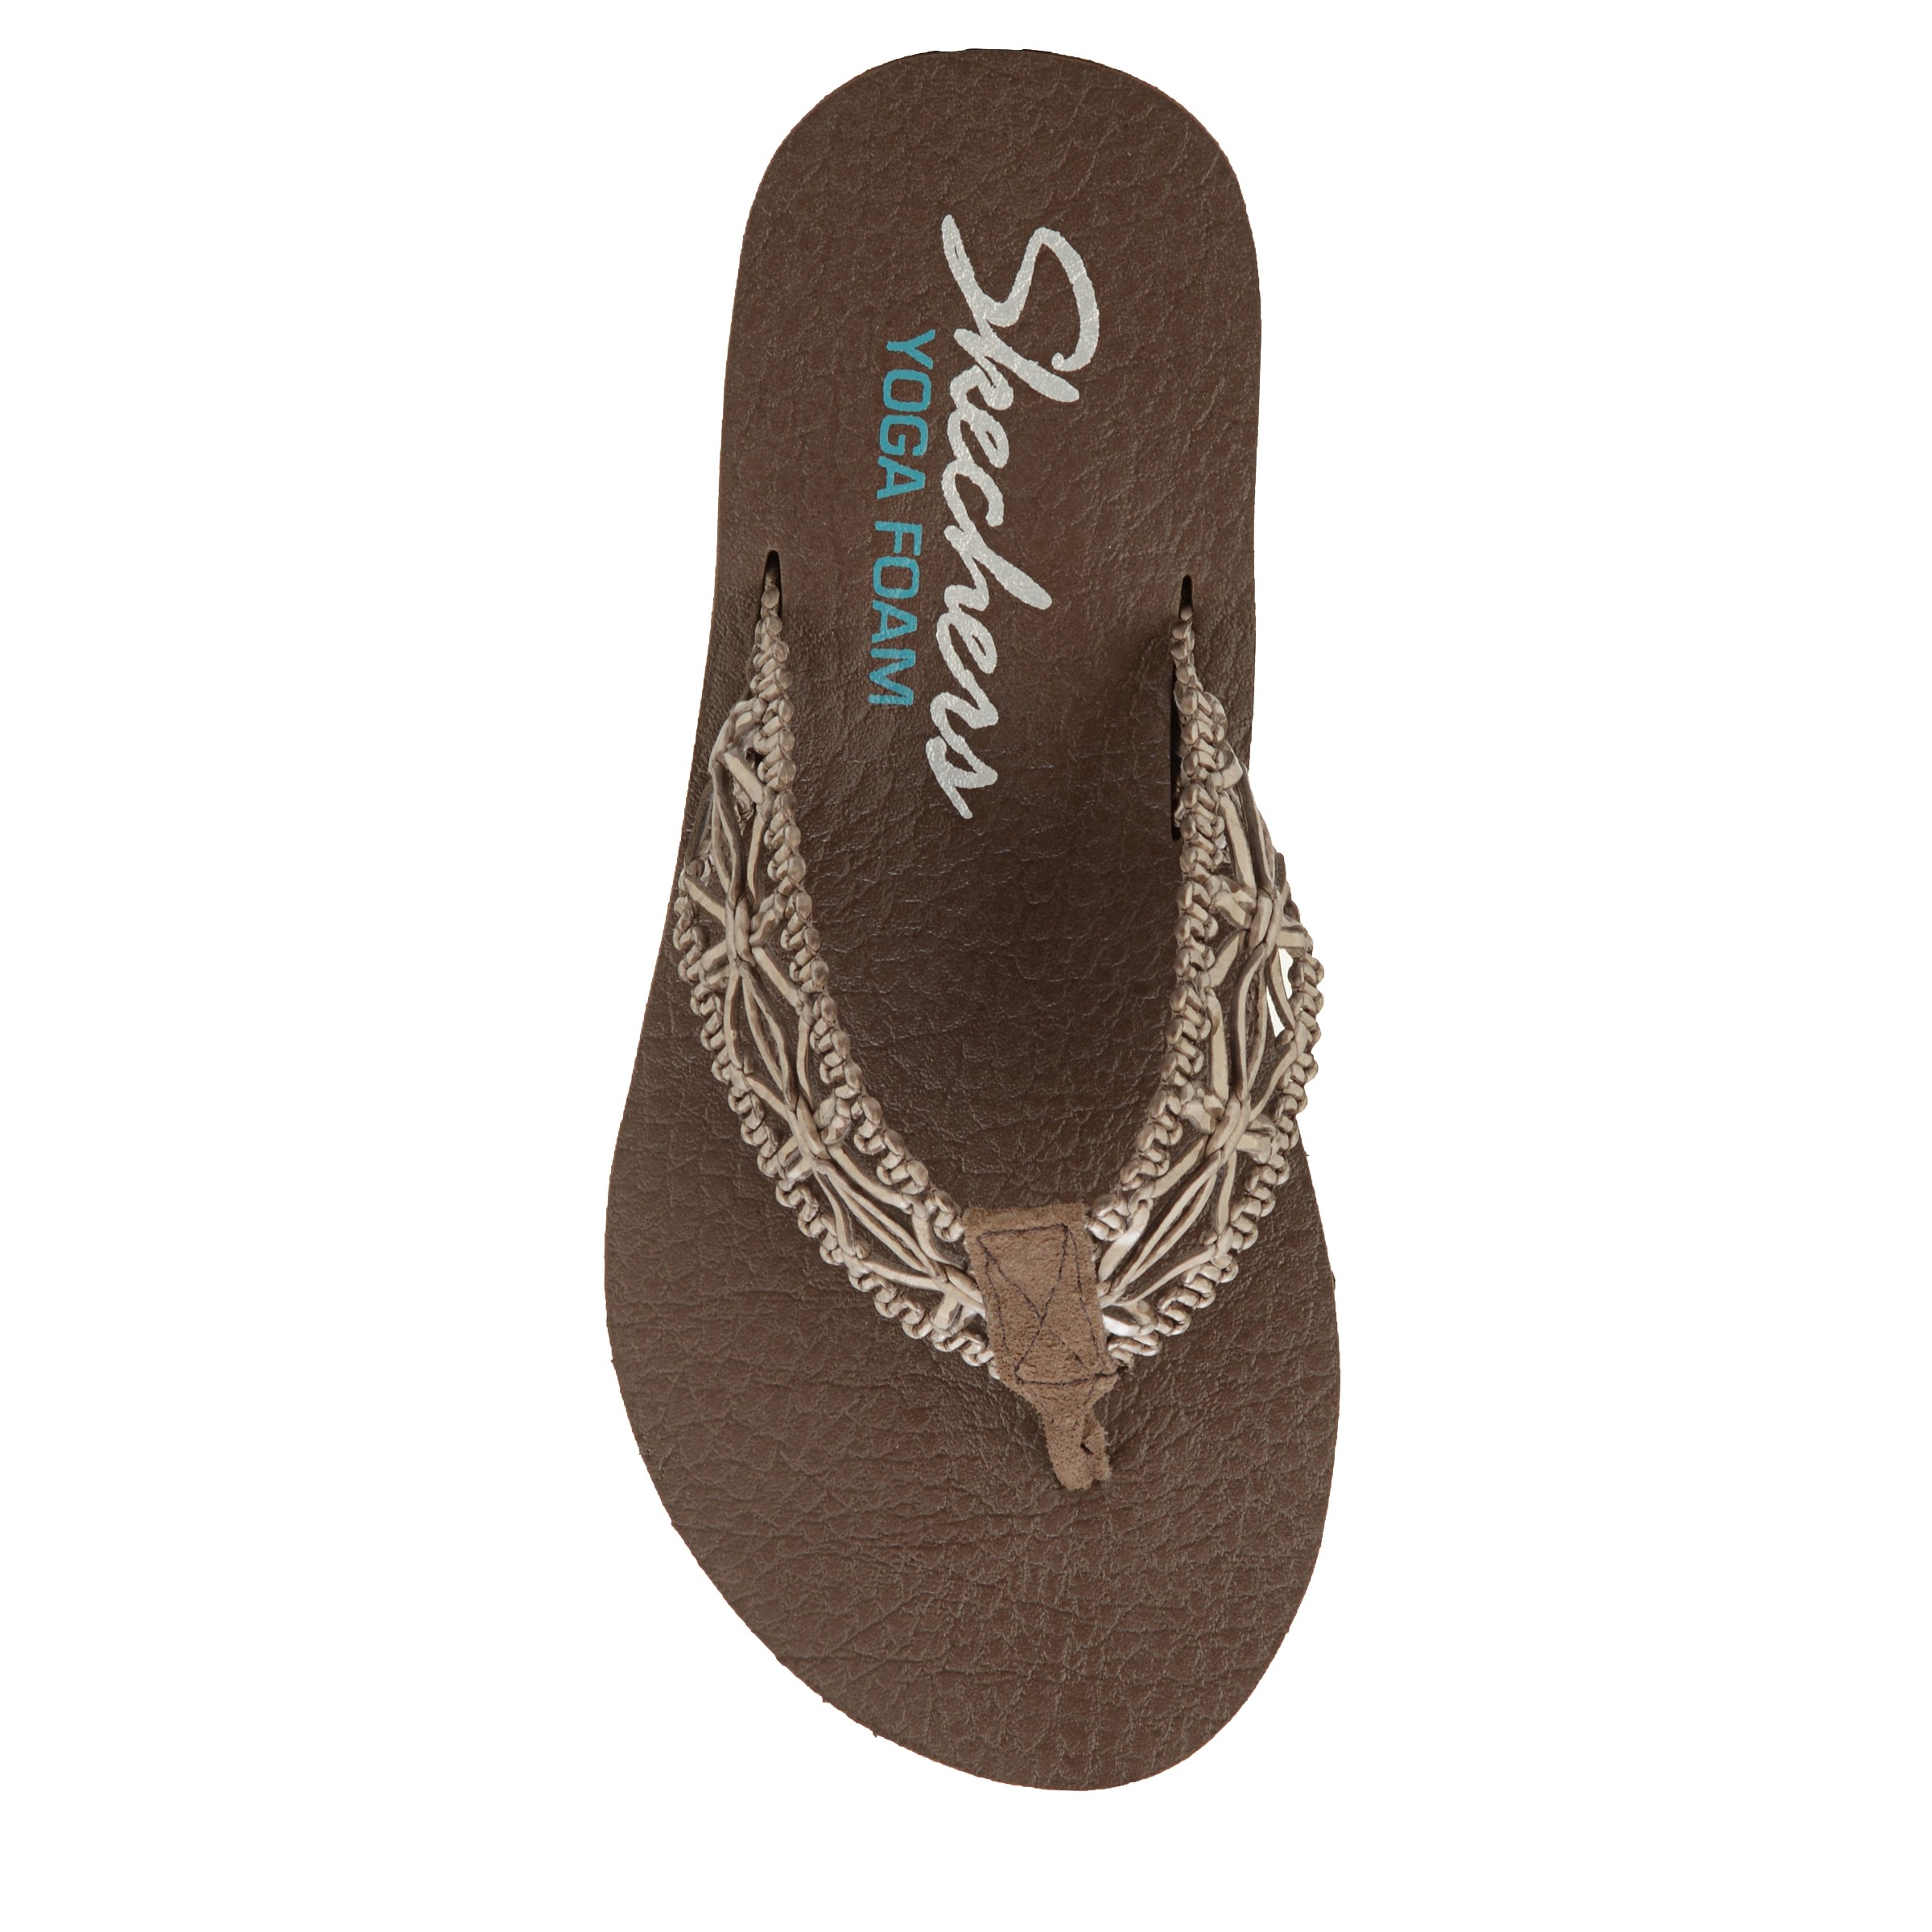 Skechers Women's 31755 Meditation Stars Sparkle Yoga Foam Thong Sandal –  That Shoe Store and More